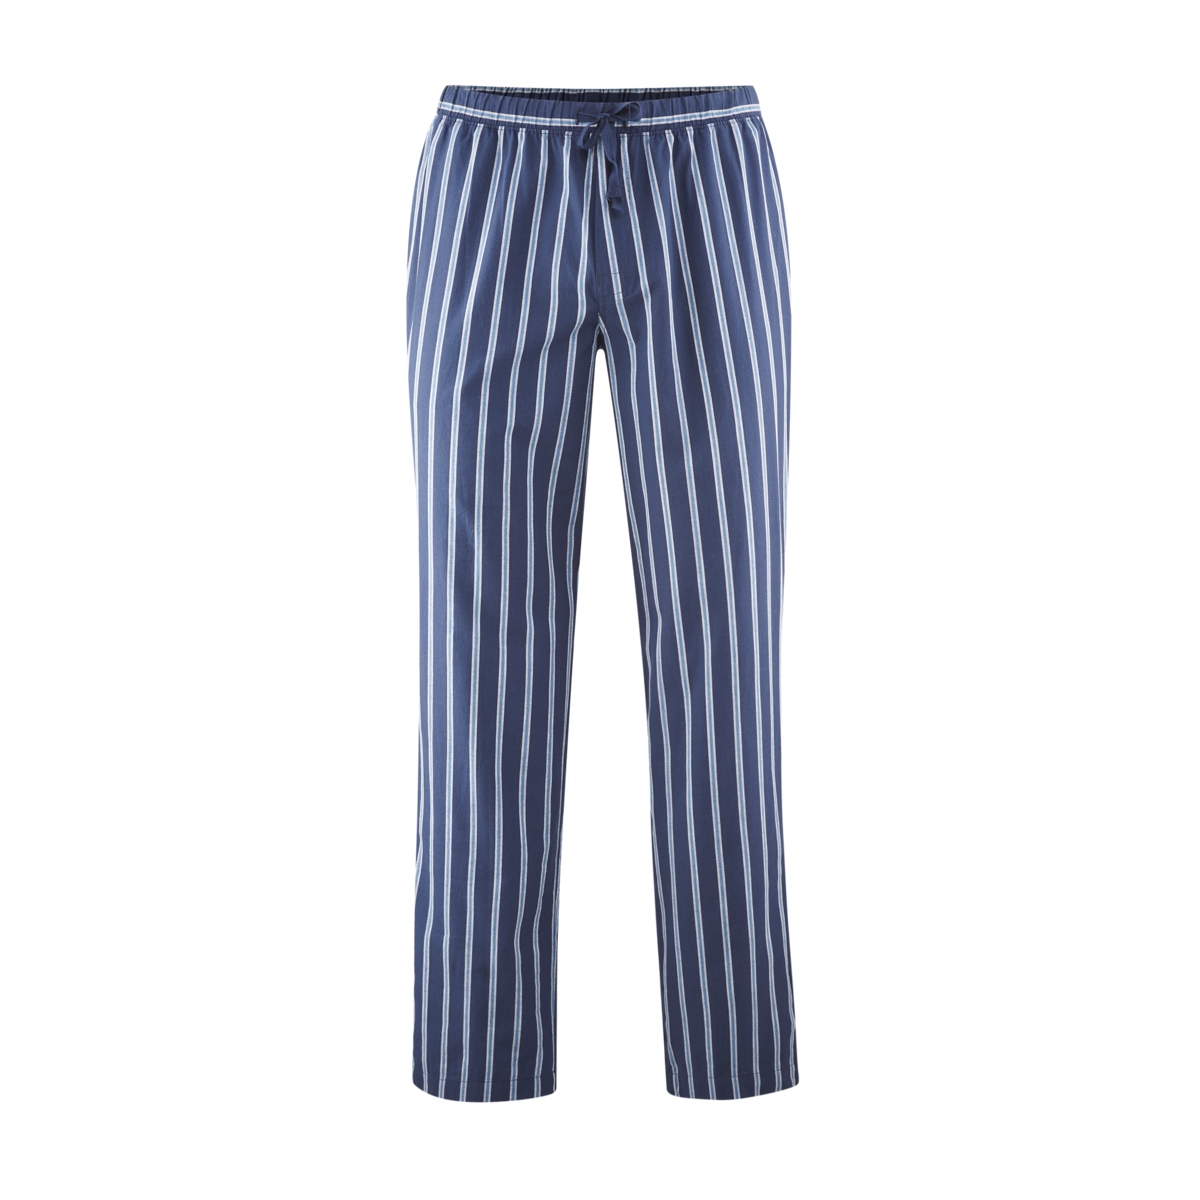 Pattern Sleep trousers, KLEMENS